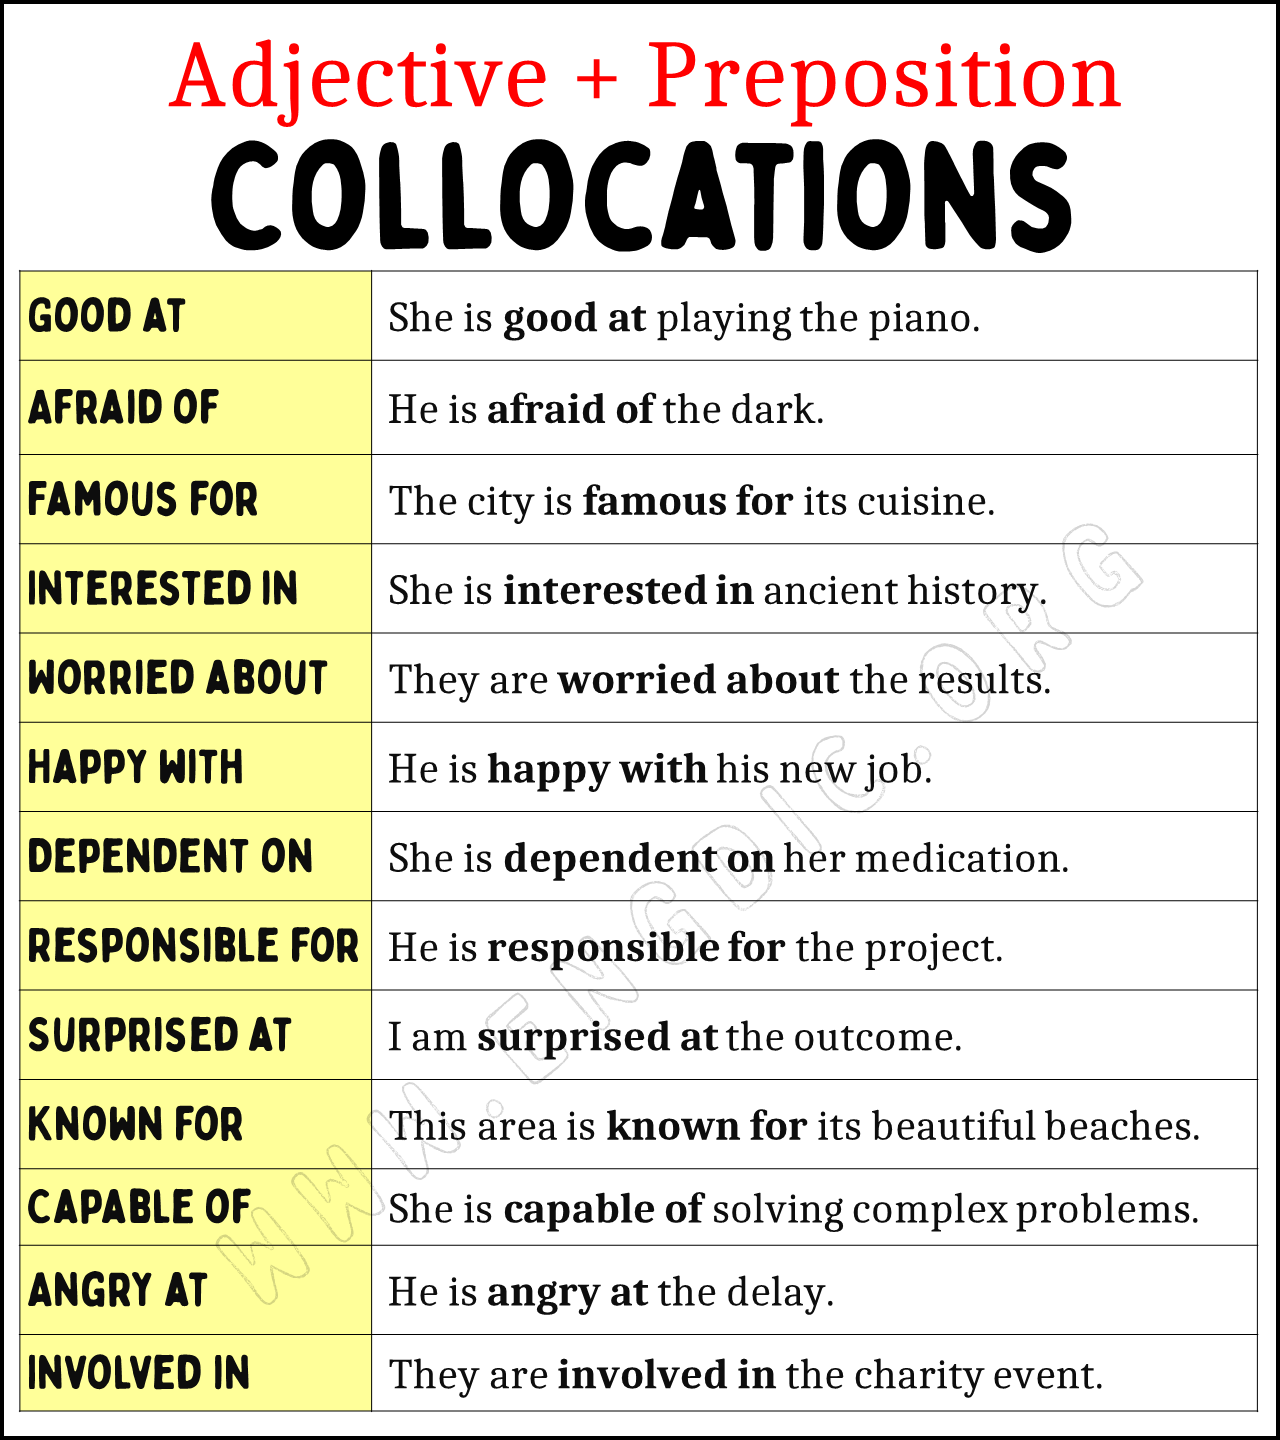 Adjective + Preposition Collocations